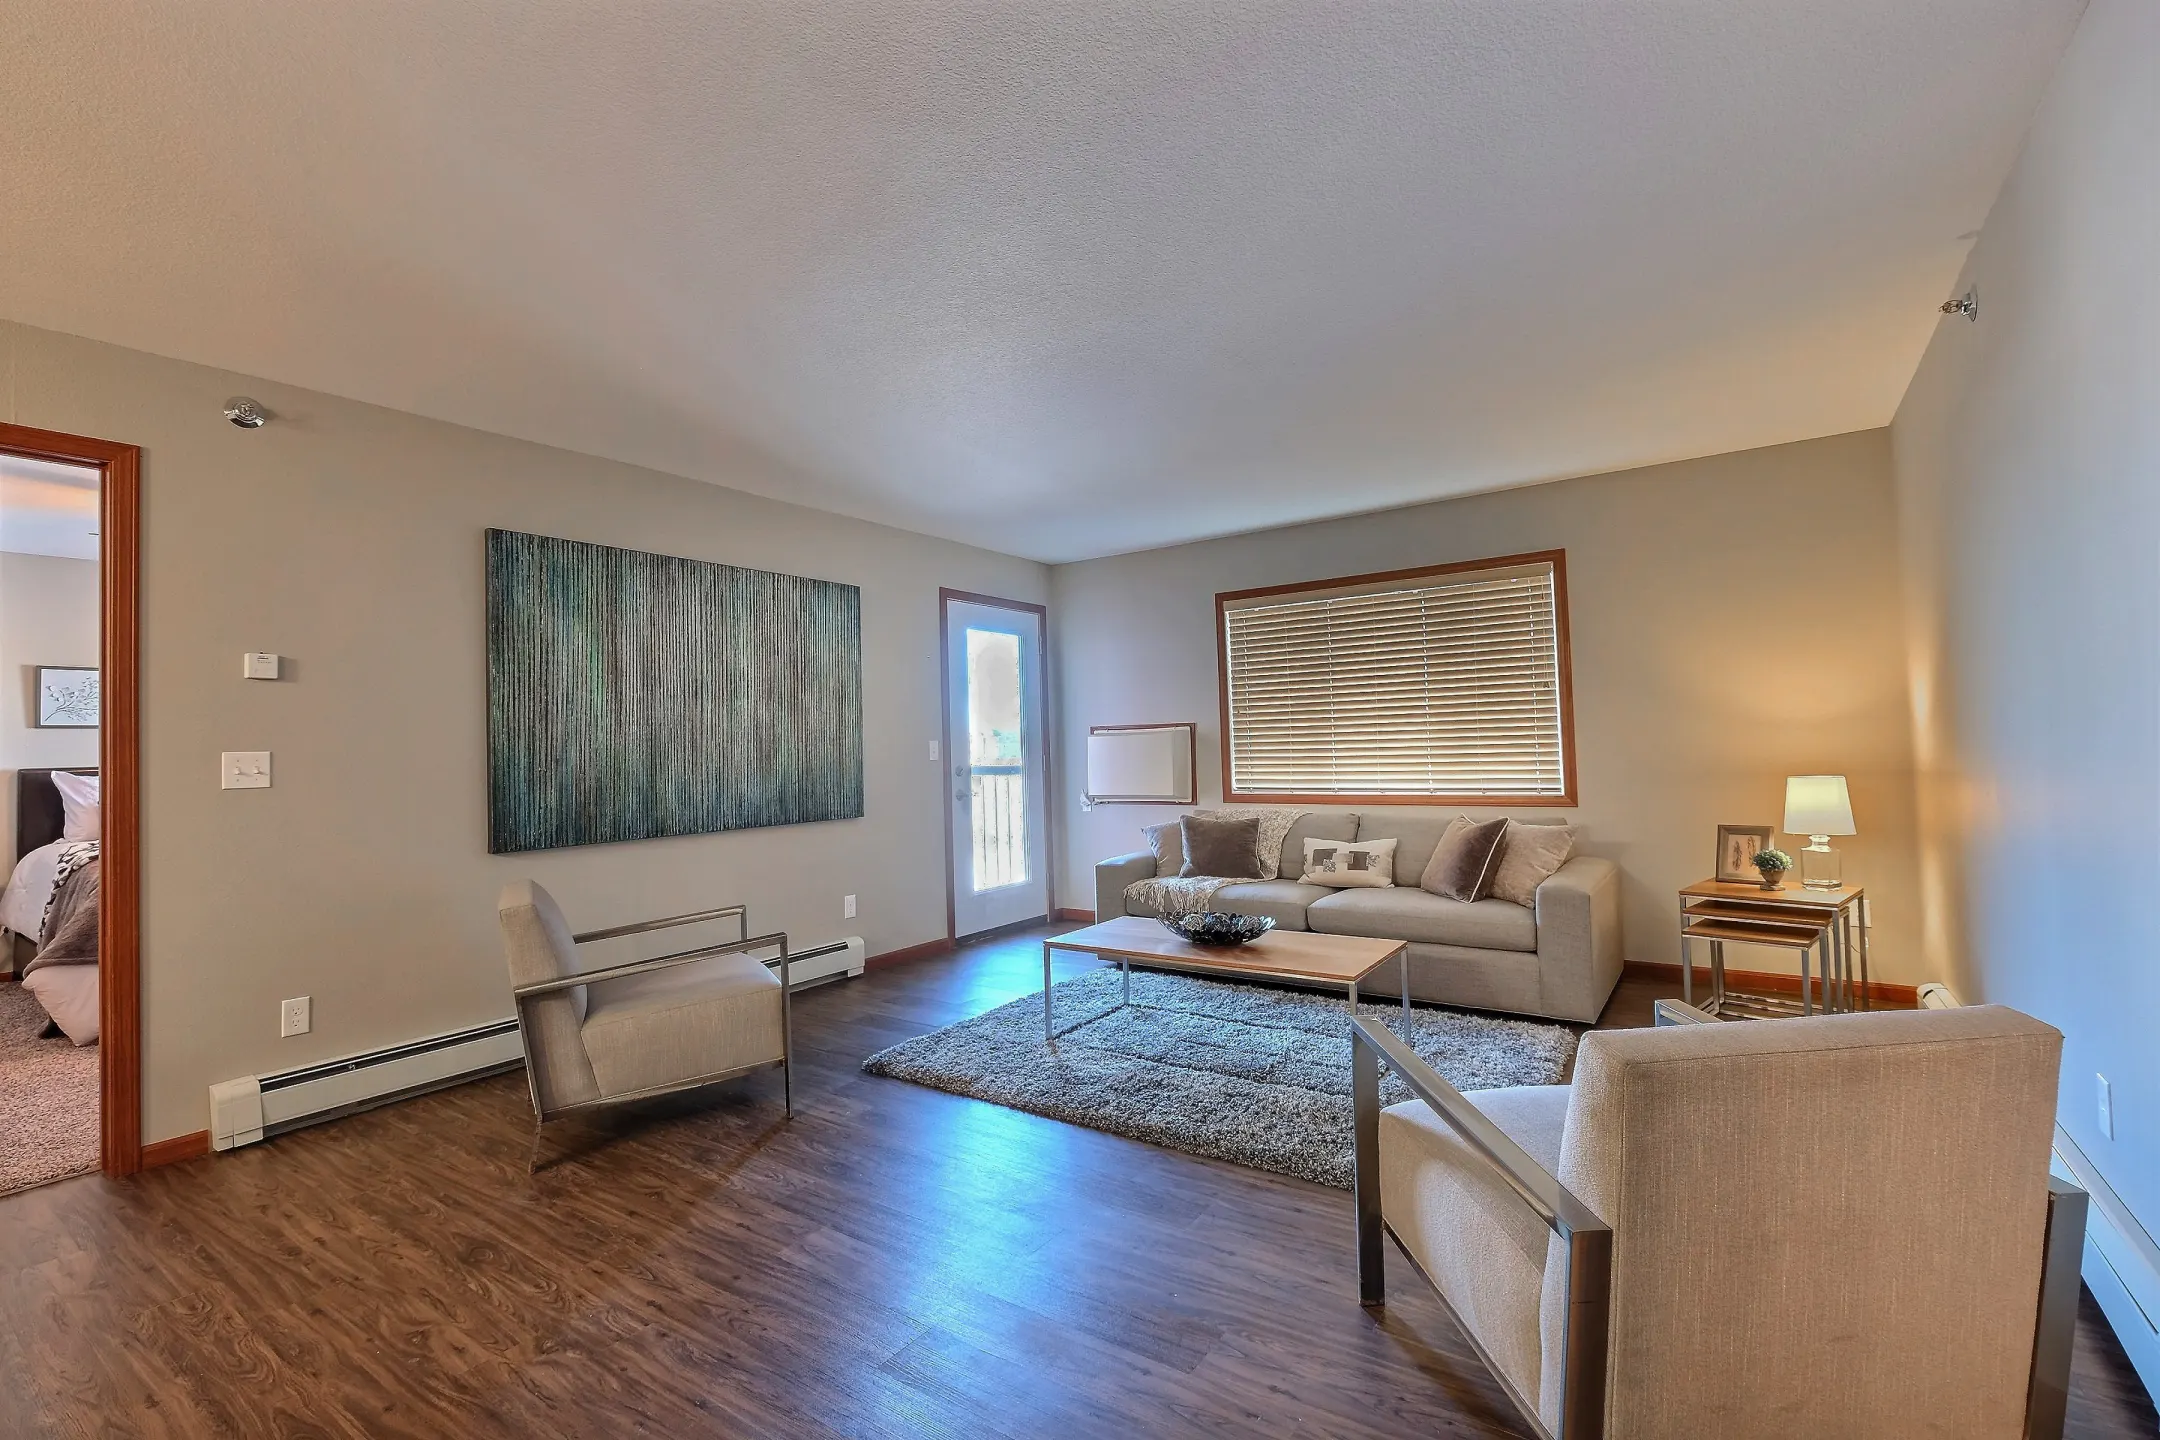 Living Room - Urban Plains Apartments - Fargo, ND